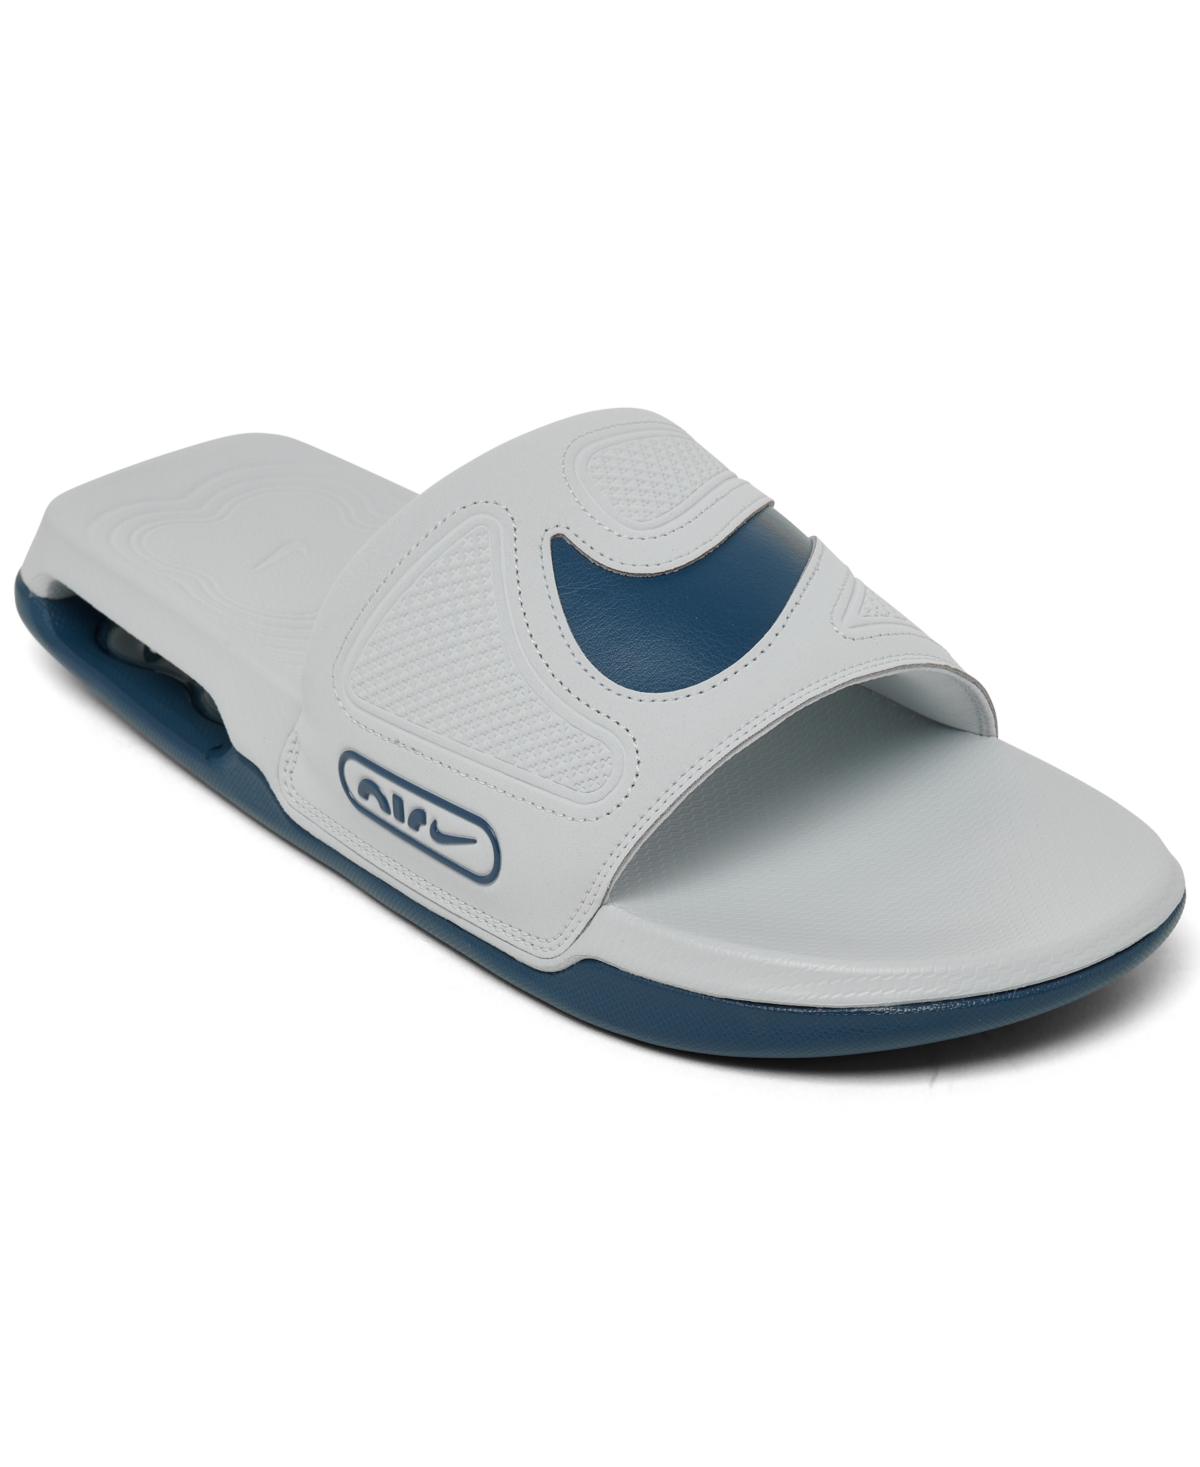 Men's Air Max Cirro Slide Sandals from Finish Line - Pure Platinum, Blue